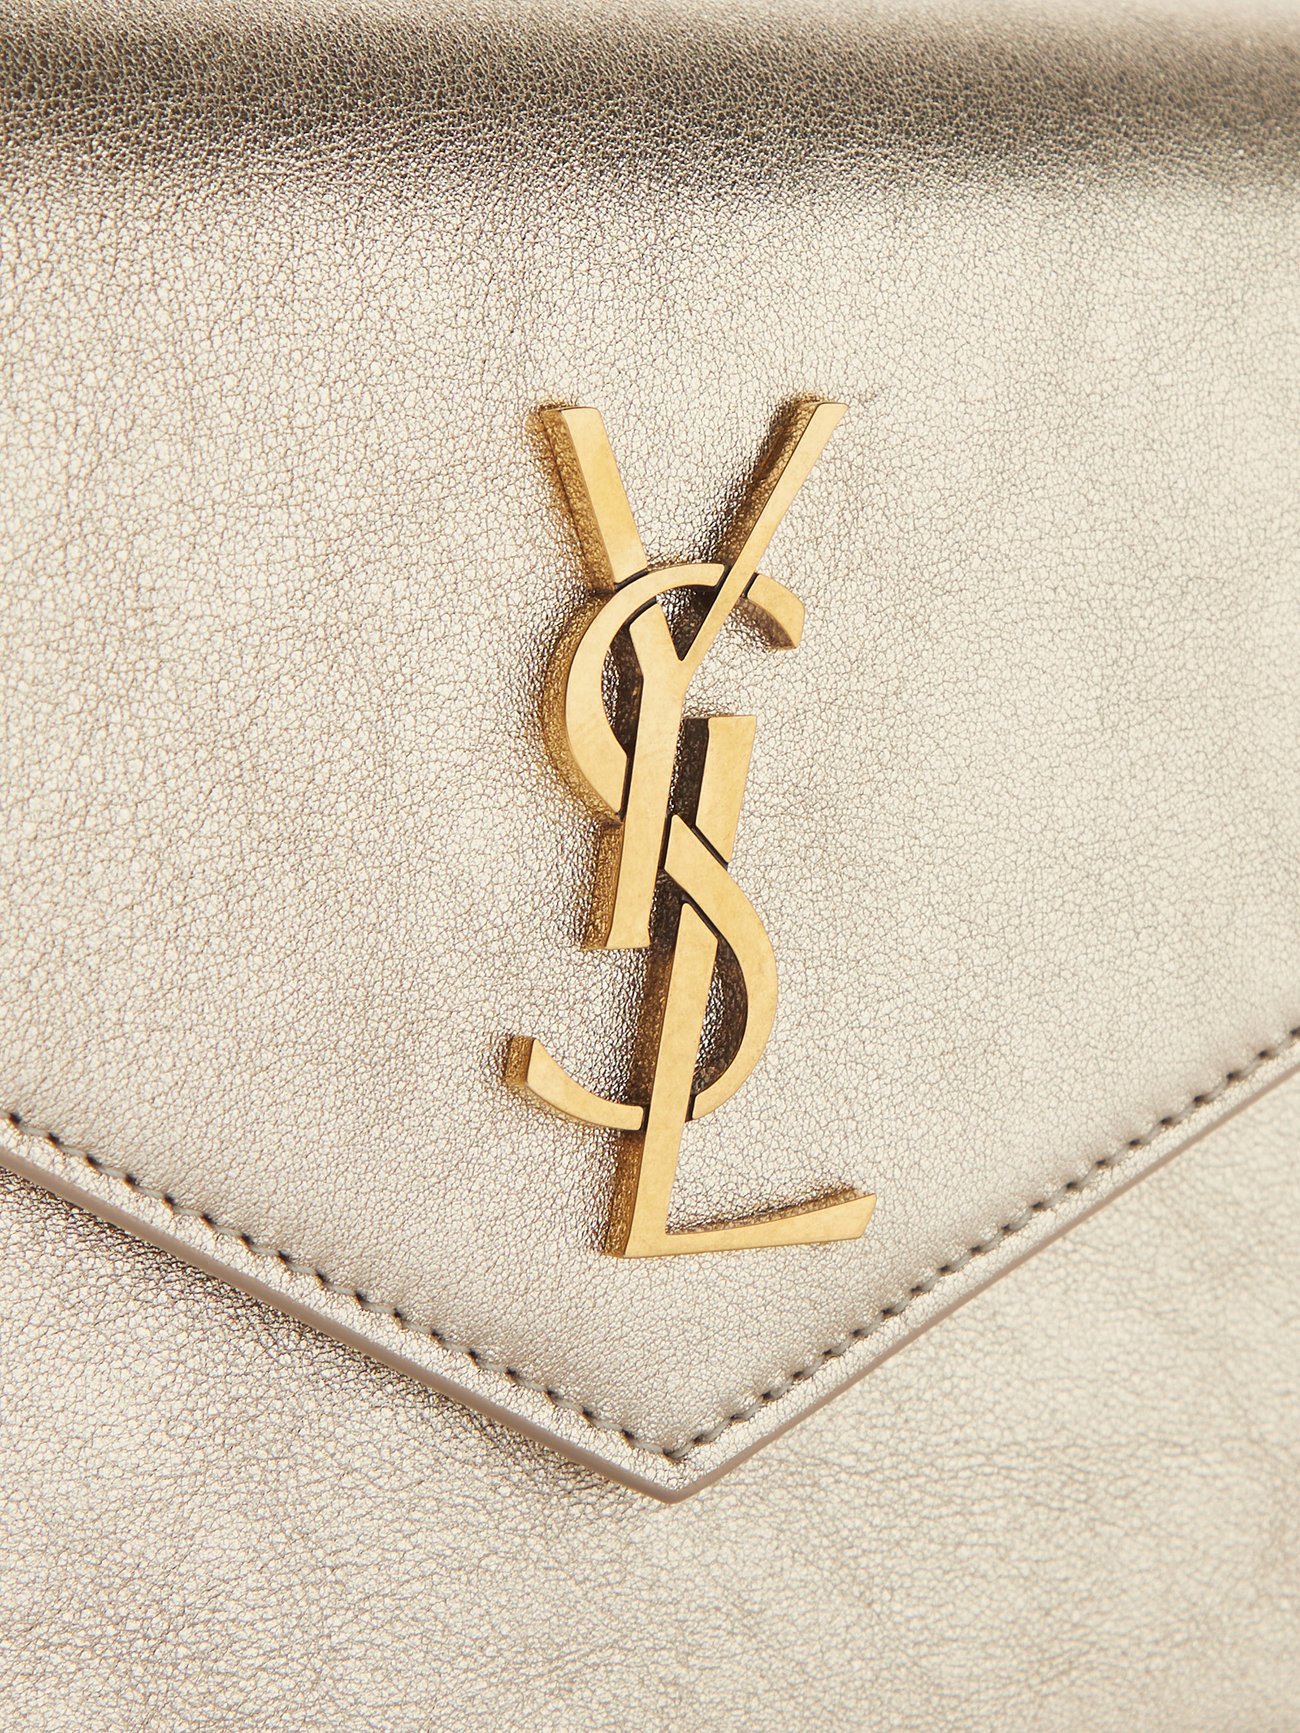 Gold Envelope YSL-logo leather cross-body bag, Saint Laurent